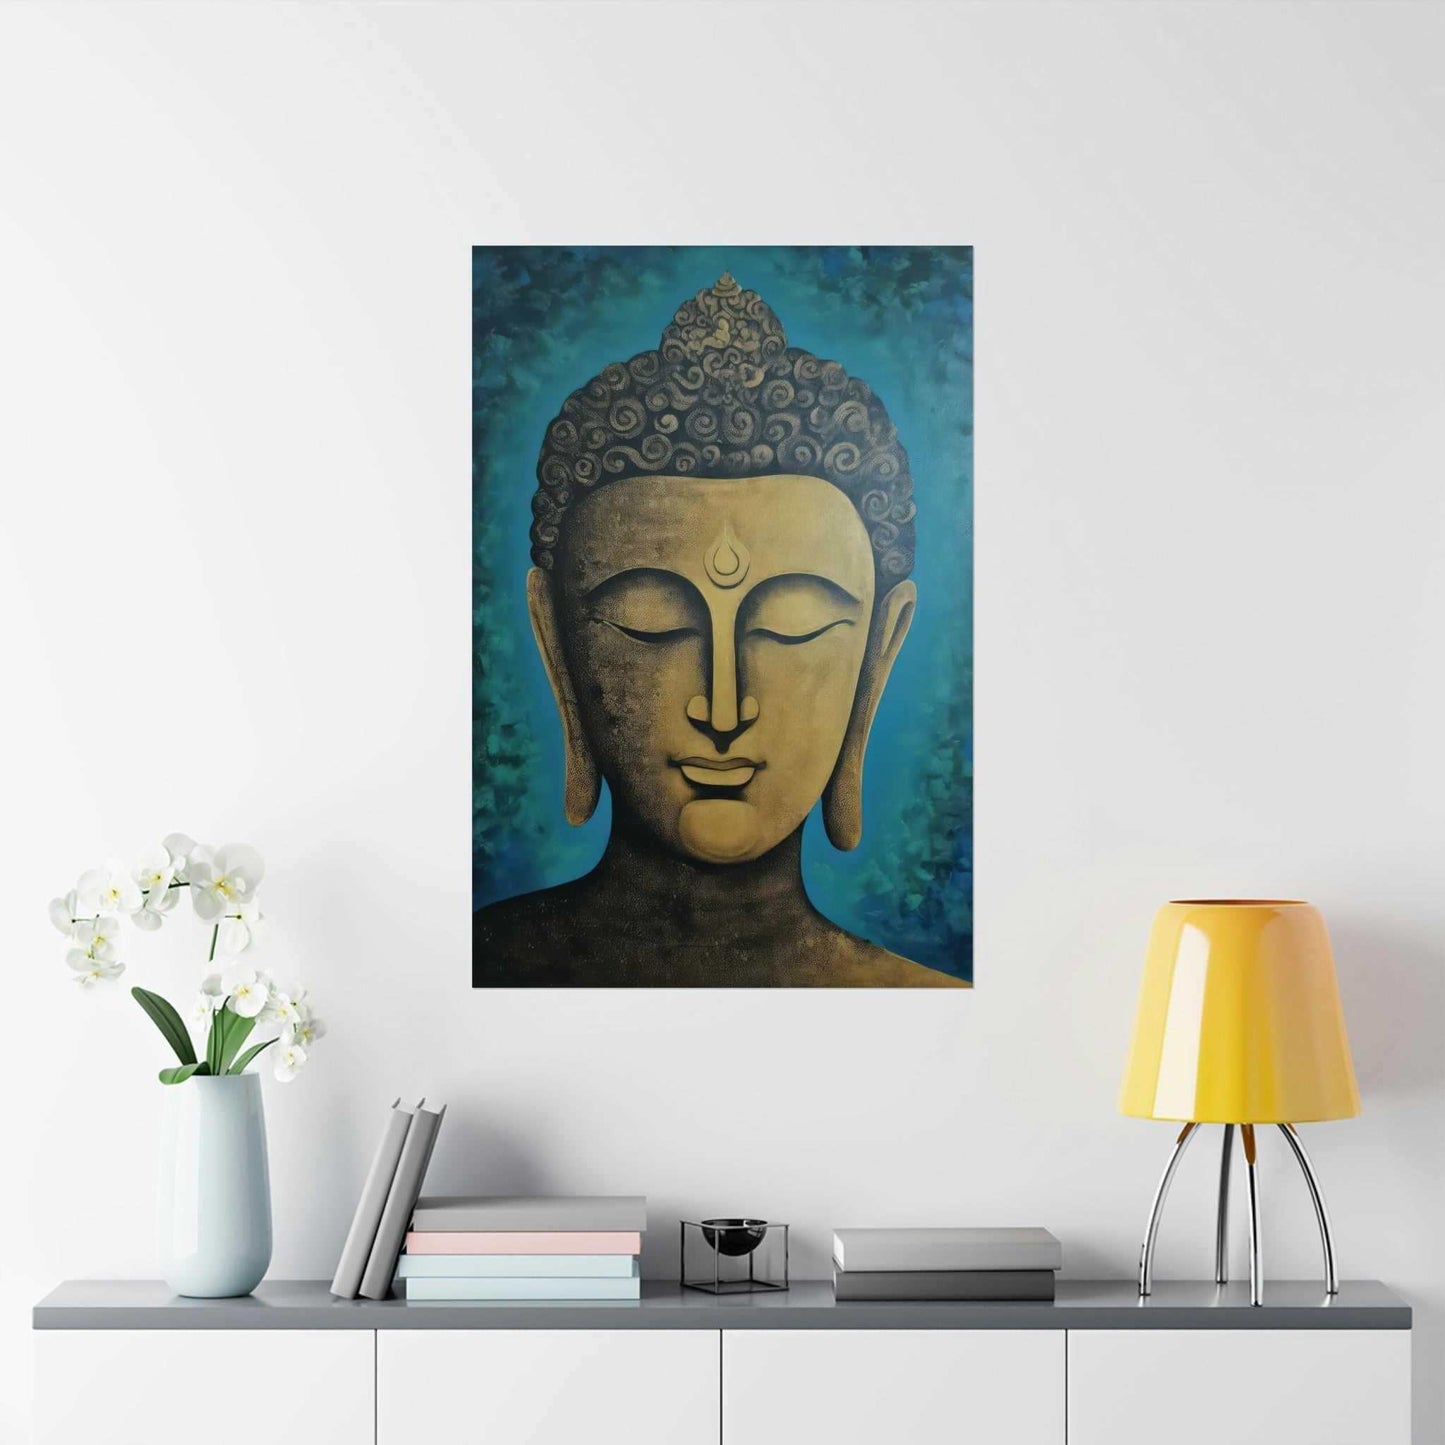 New York Zen Office Decor Golden Buddha Head poster, a striking piece of ZenArtBliss.com's collection, blending tranquility with golden opulence on matte paper.